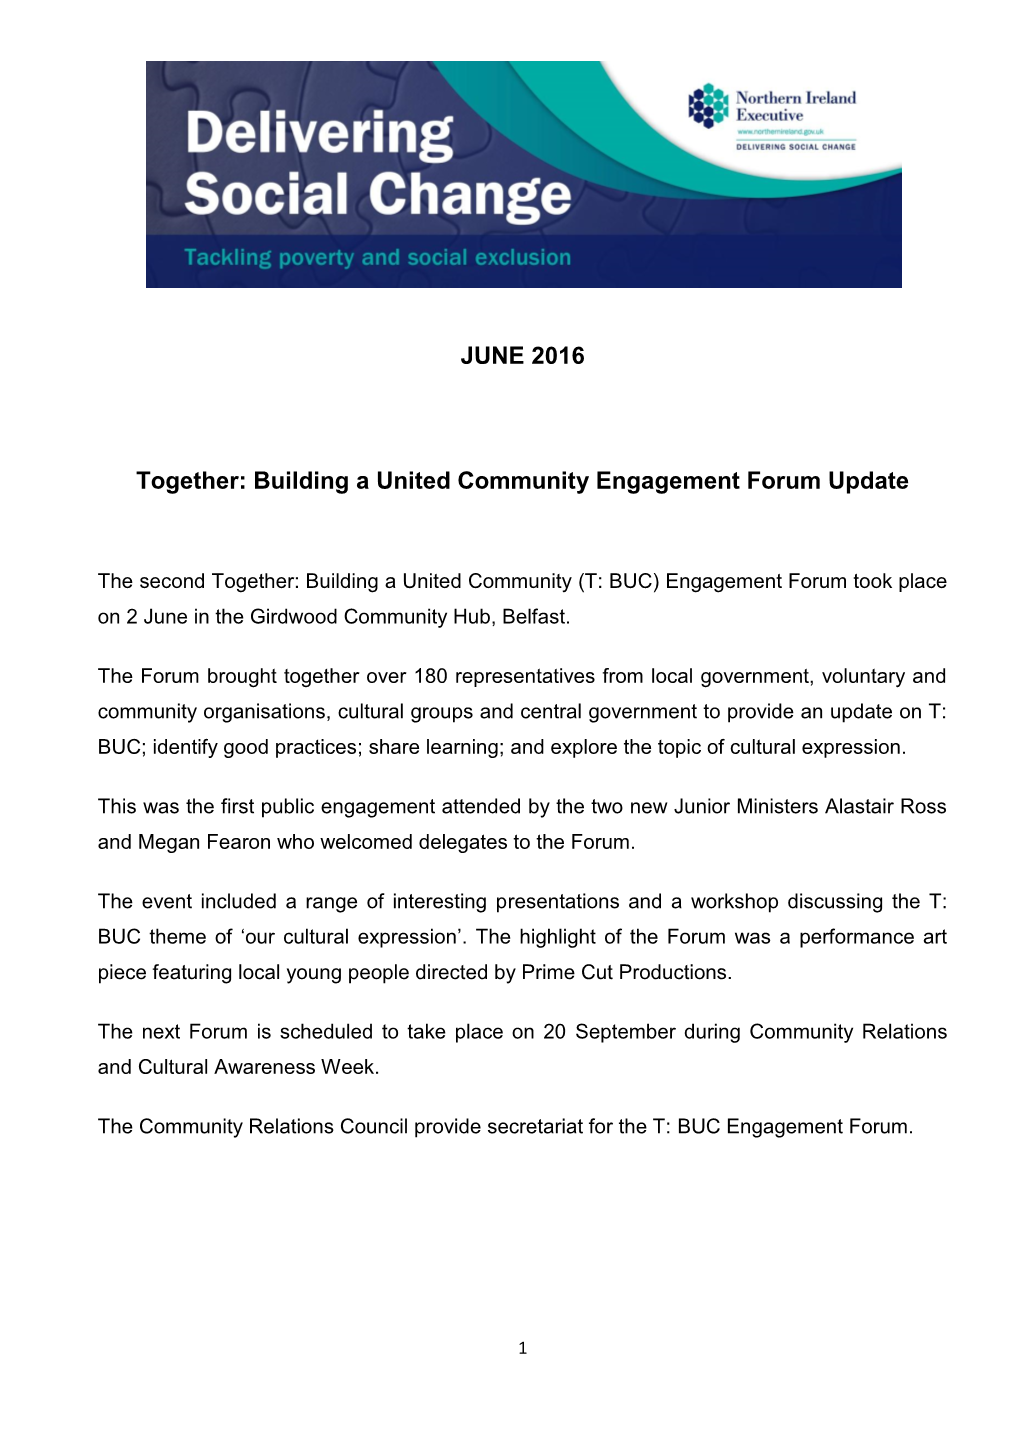 JUNE 2016 Together: Building a United Community Engagement Forum Update